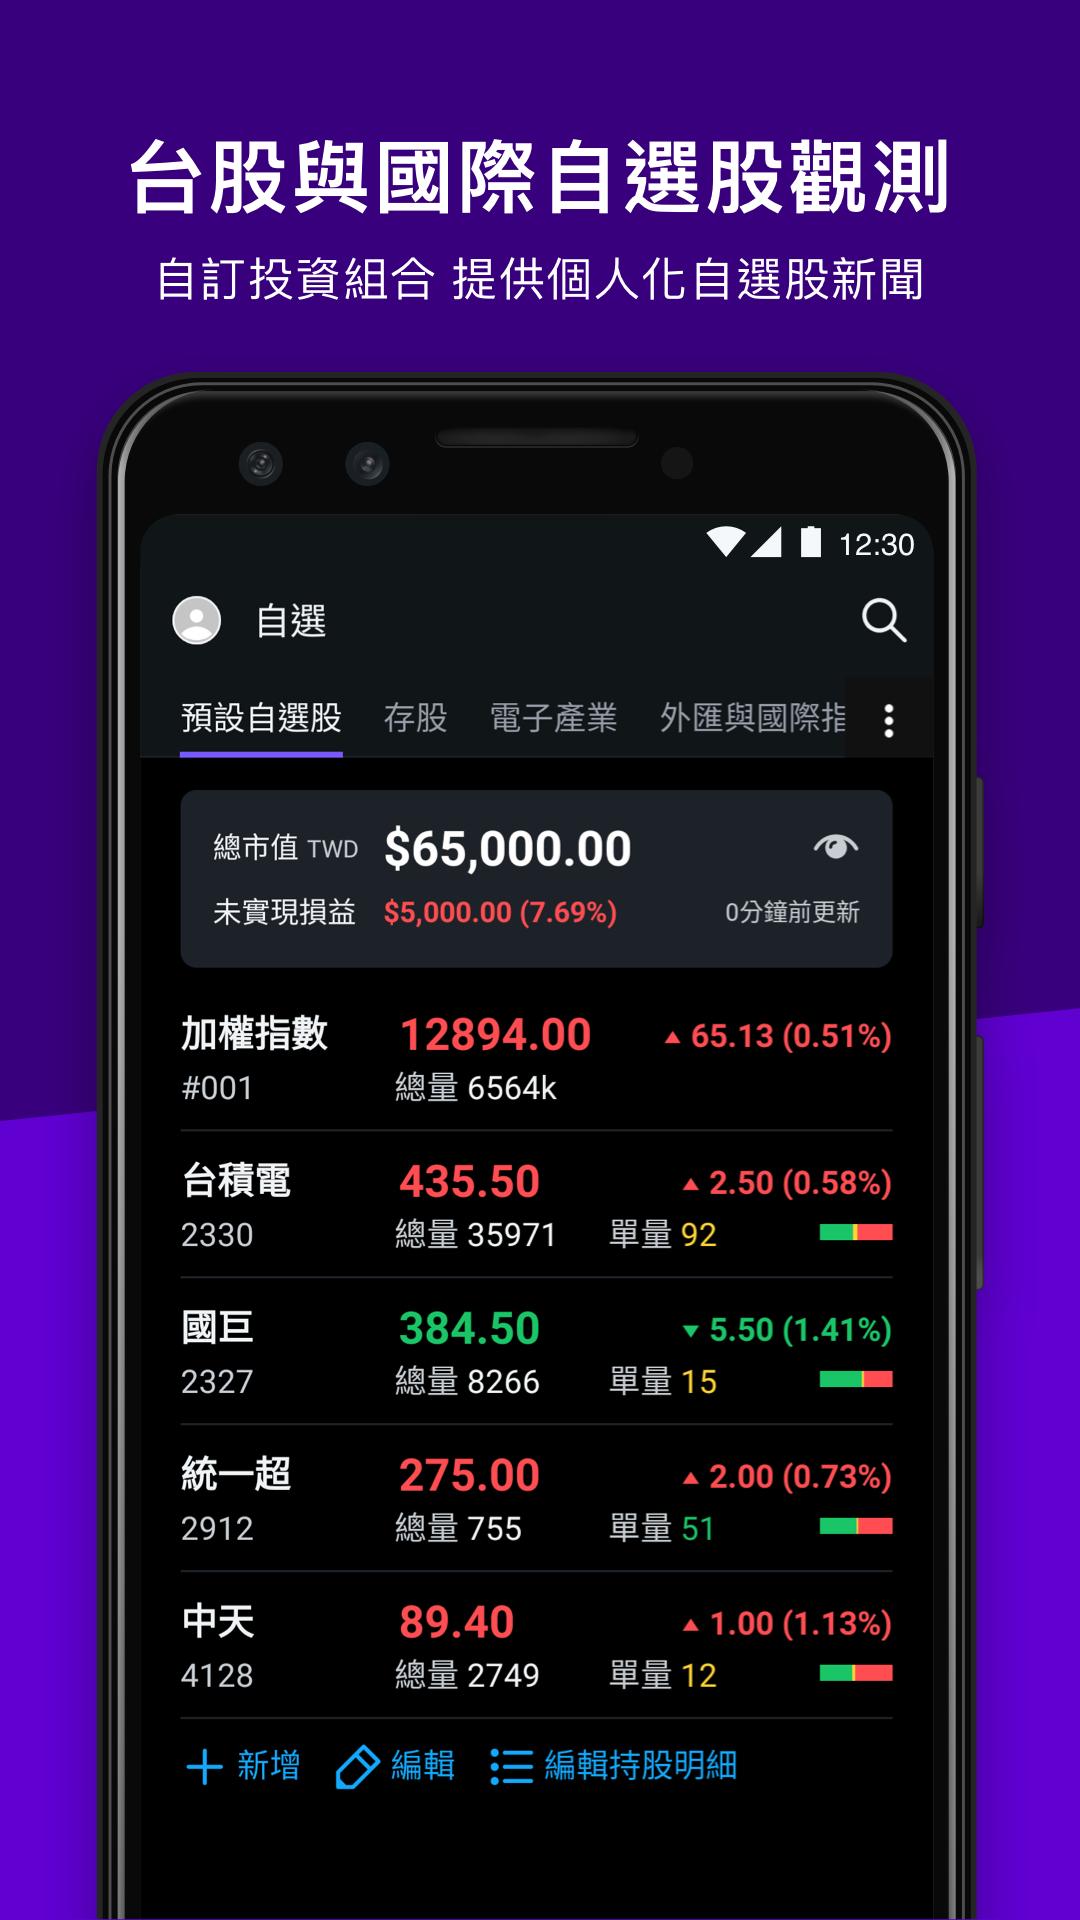 Yahoo奇摩股市– 台股即時報價 個人化股票投資組合及財經新聞 外匯走勢 行動理財App 2.10.1 Screenshot 3